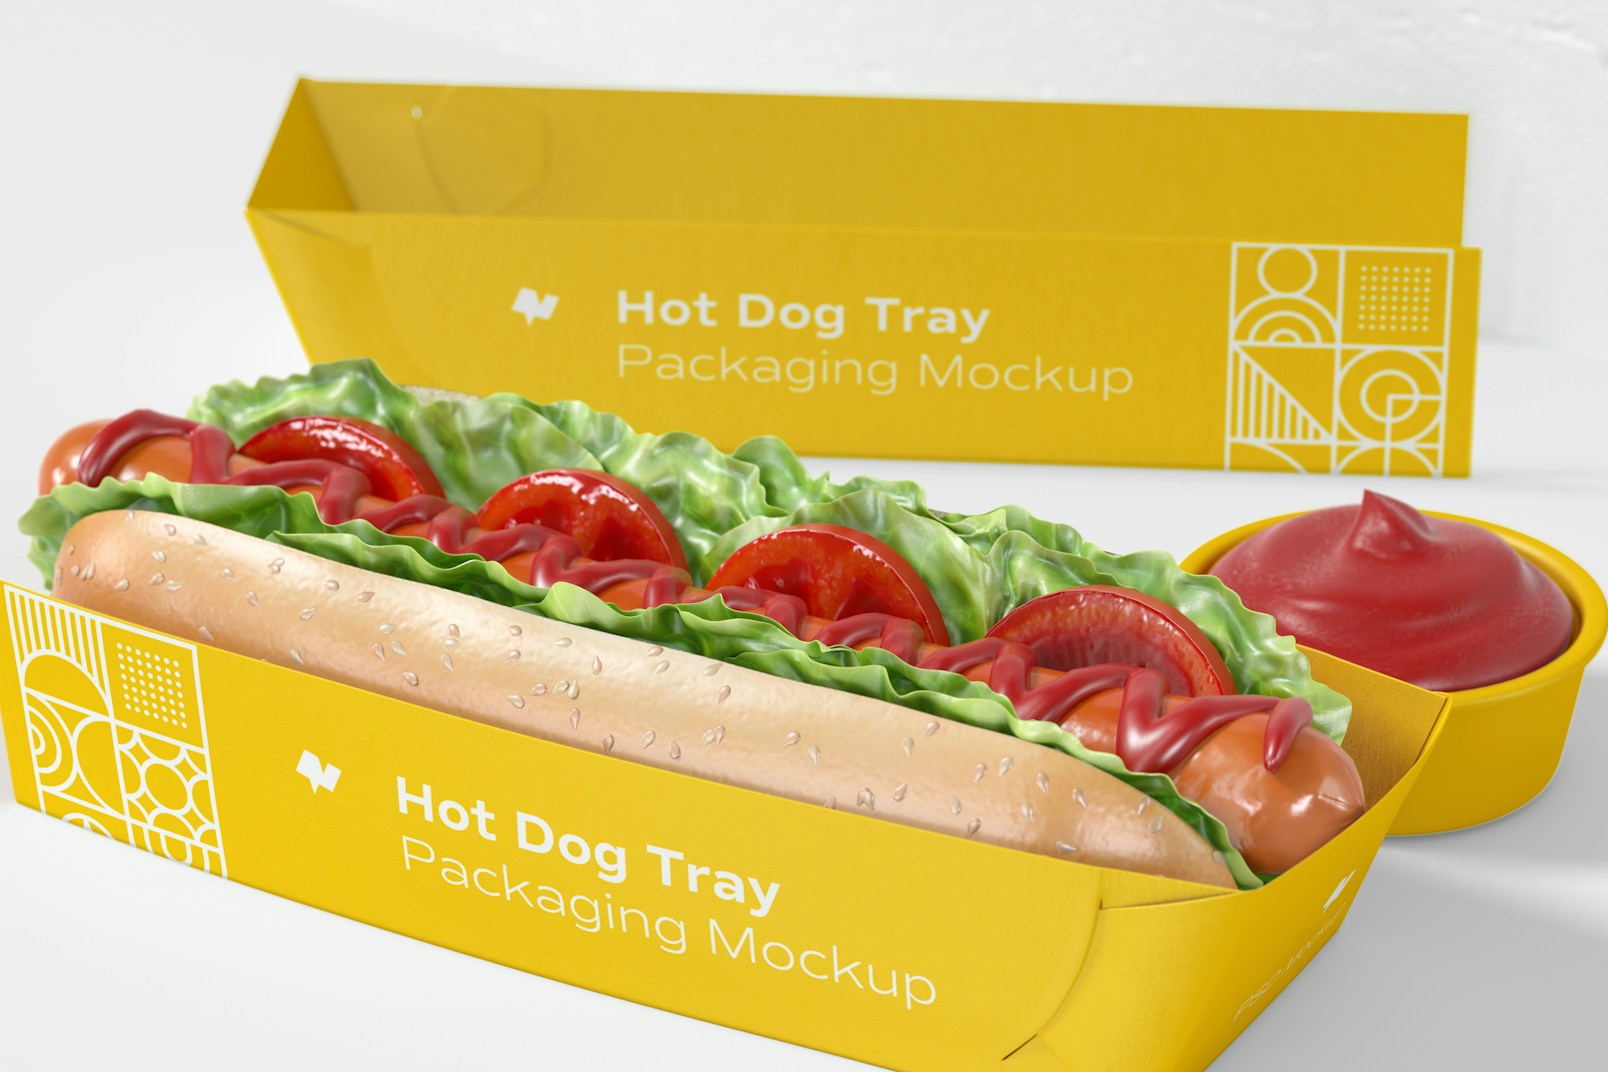 Hot Dog Tray Packaging Mockup, Right View